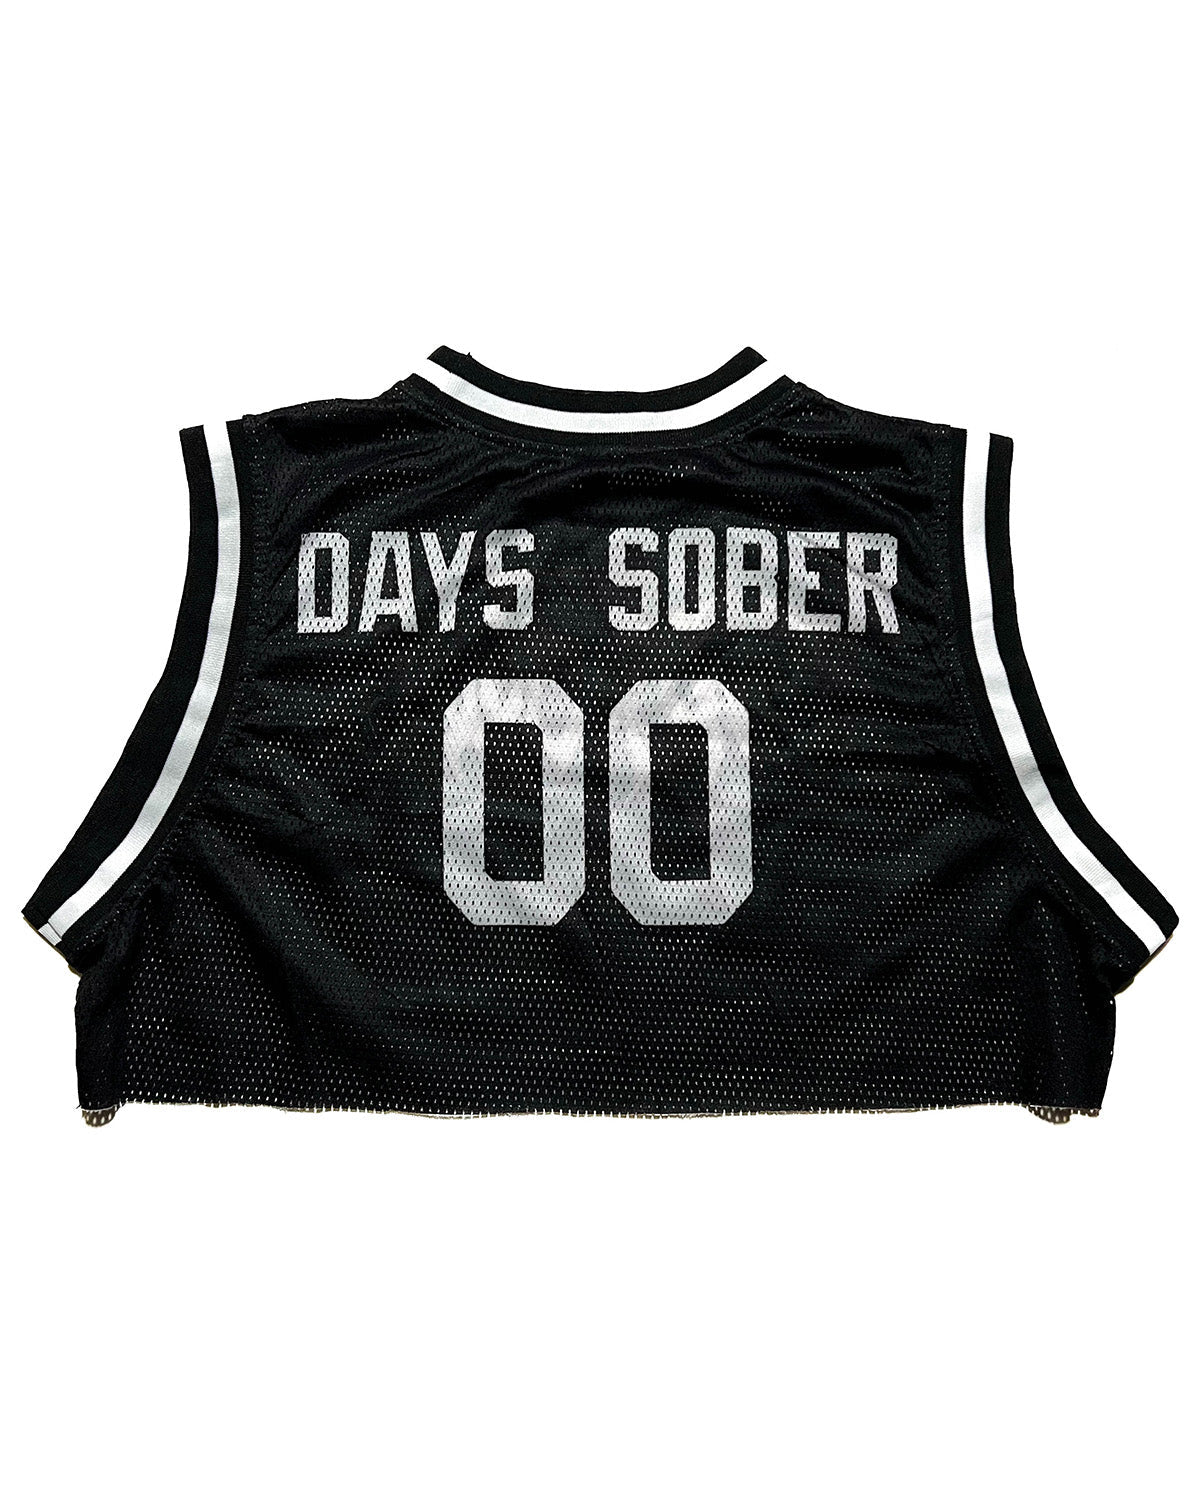 00-DAYS-SOBER wholesale